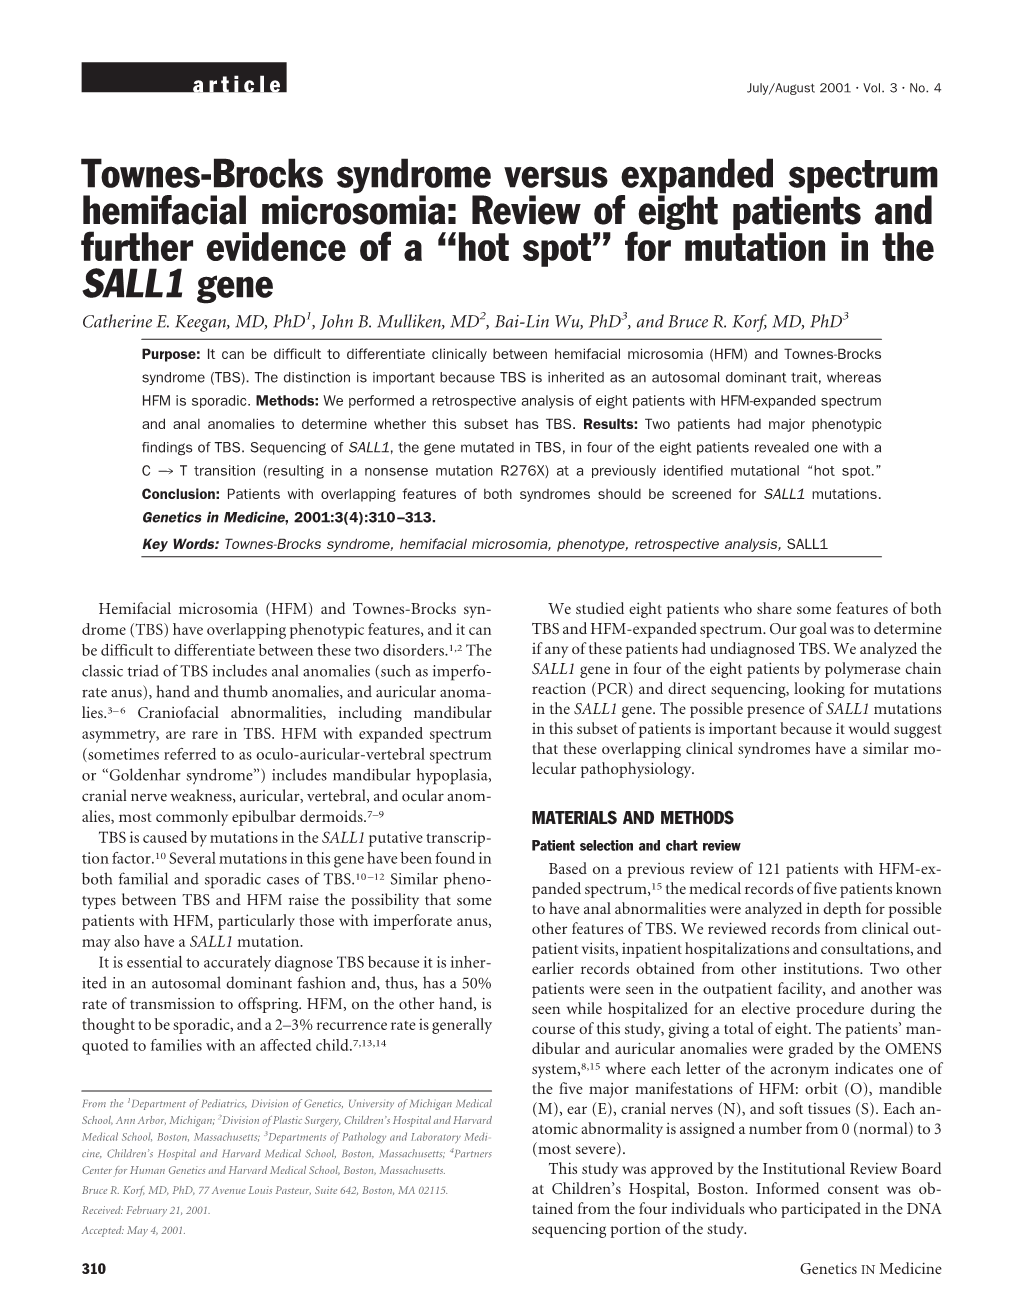 Townes-Brocks Syndrome Versus Expanded Spectrum